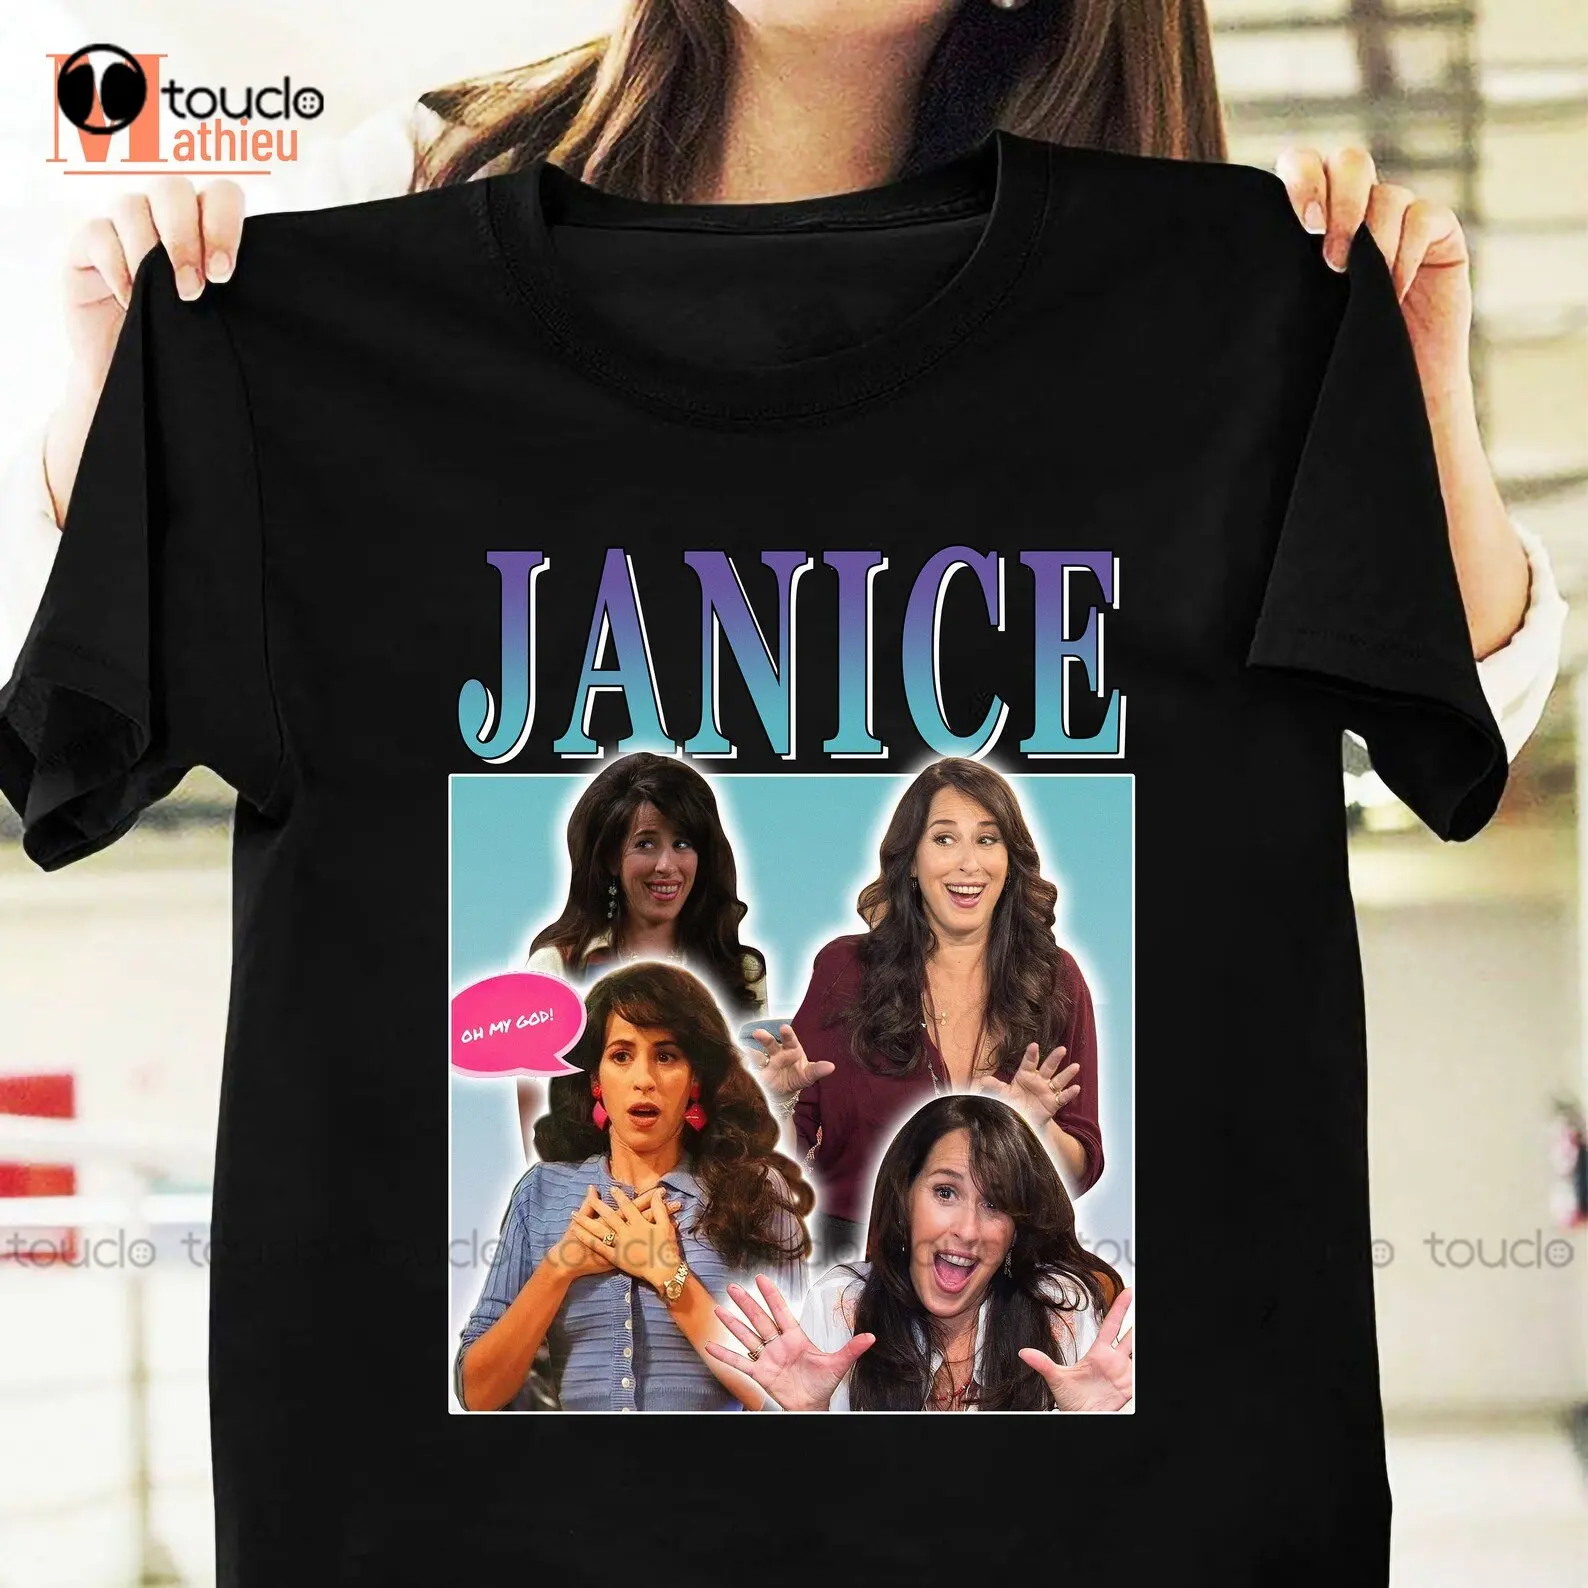 

Janice T-Shirt Friends Tv Series Shirt Oh My Gawd Oh My God Shirt Janice Shirt For Fans Cat Shirts Xs-5Xl Christmas Gift Tshirt